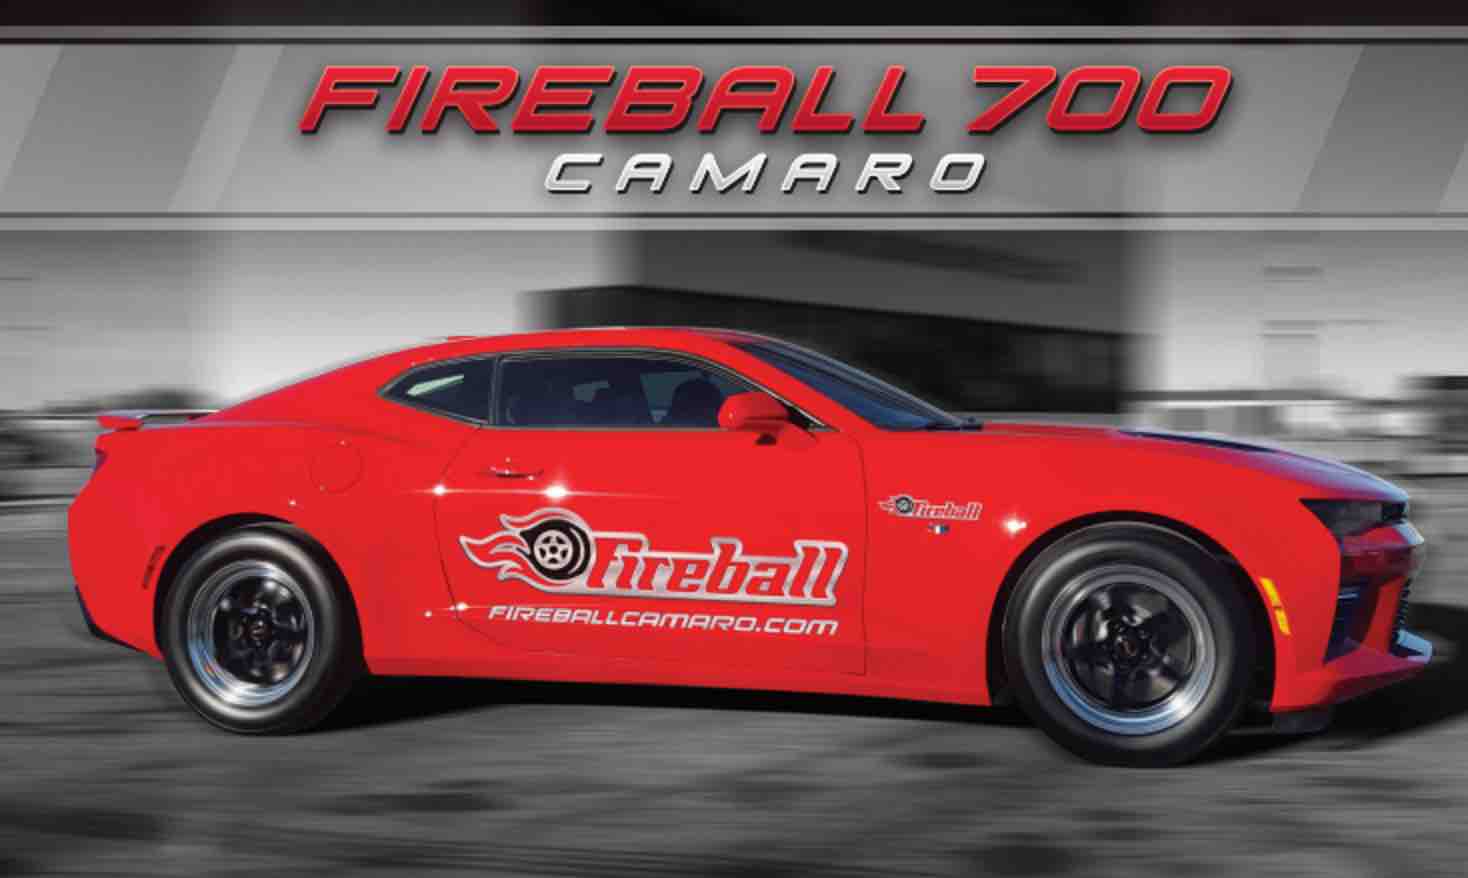 720HP Fireball 2016 Camaro Can Be Under K | GM Authority